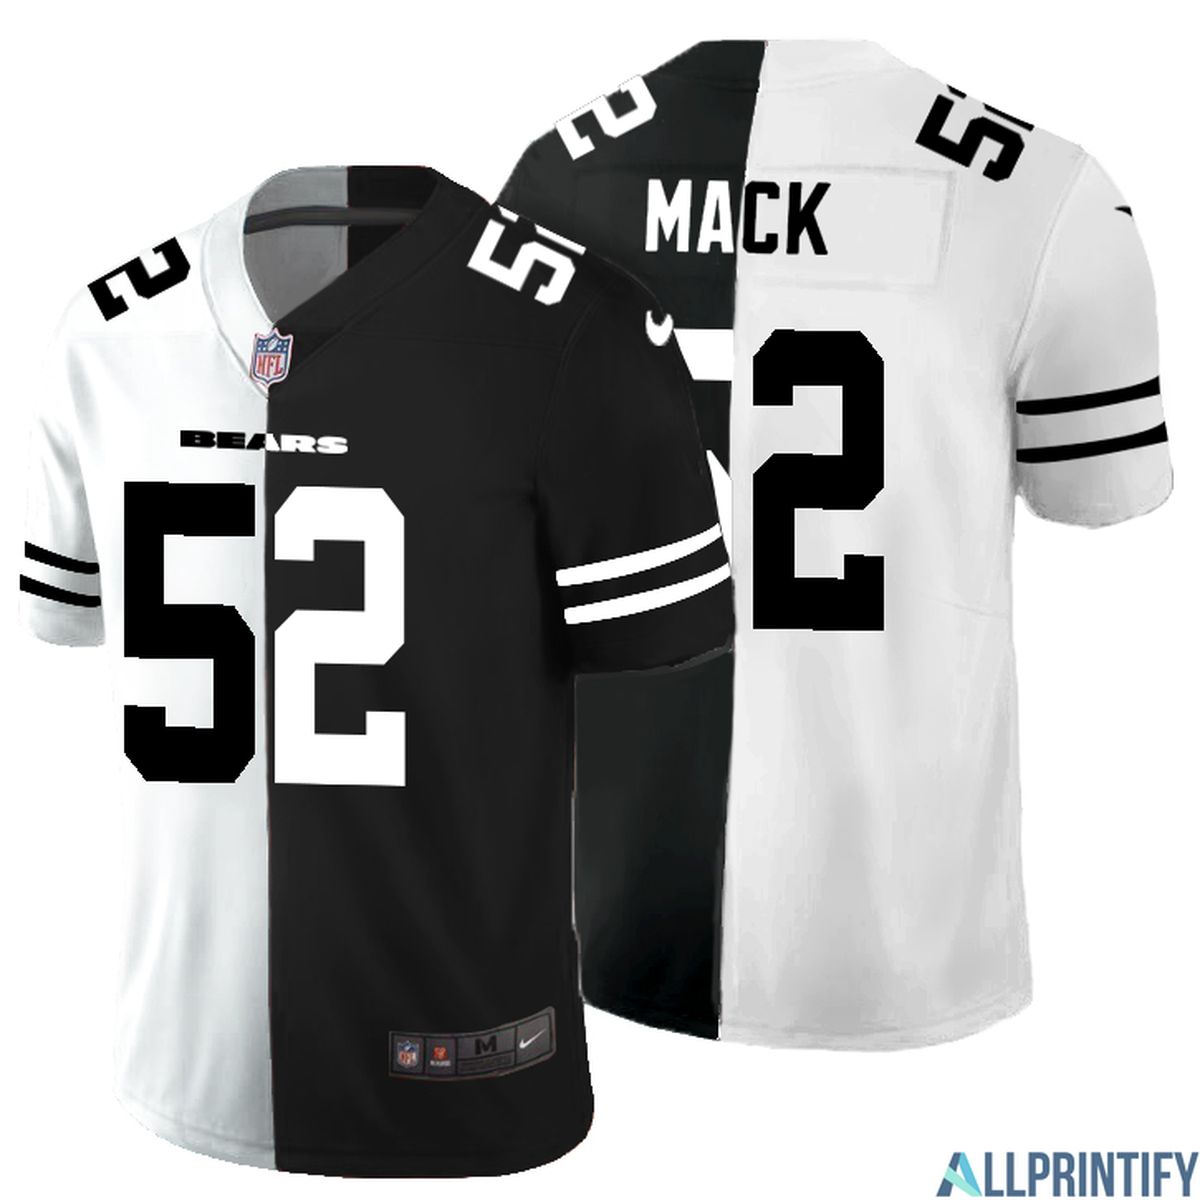 Khalil Mack Chicago Bears 52 Black And White Vapor Limited Jersey